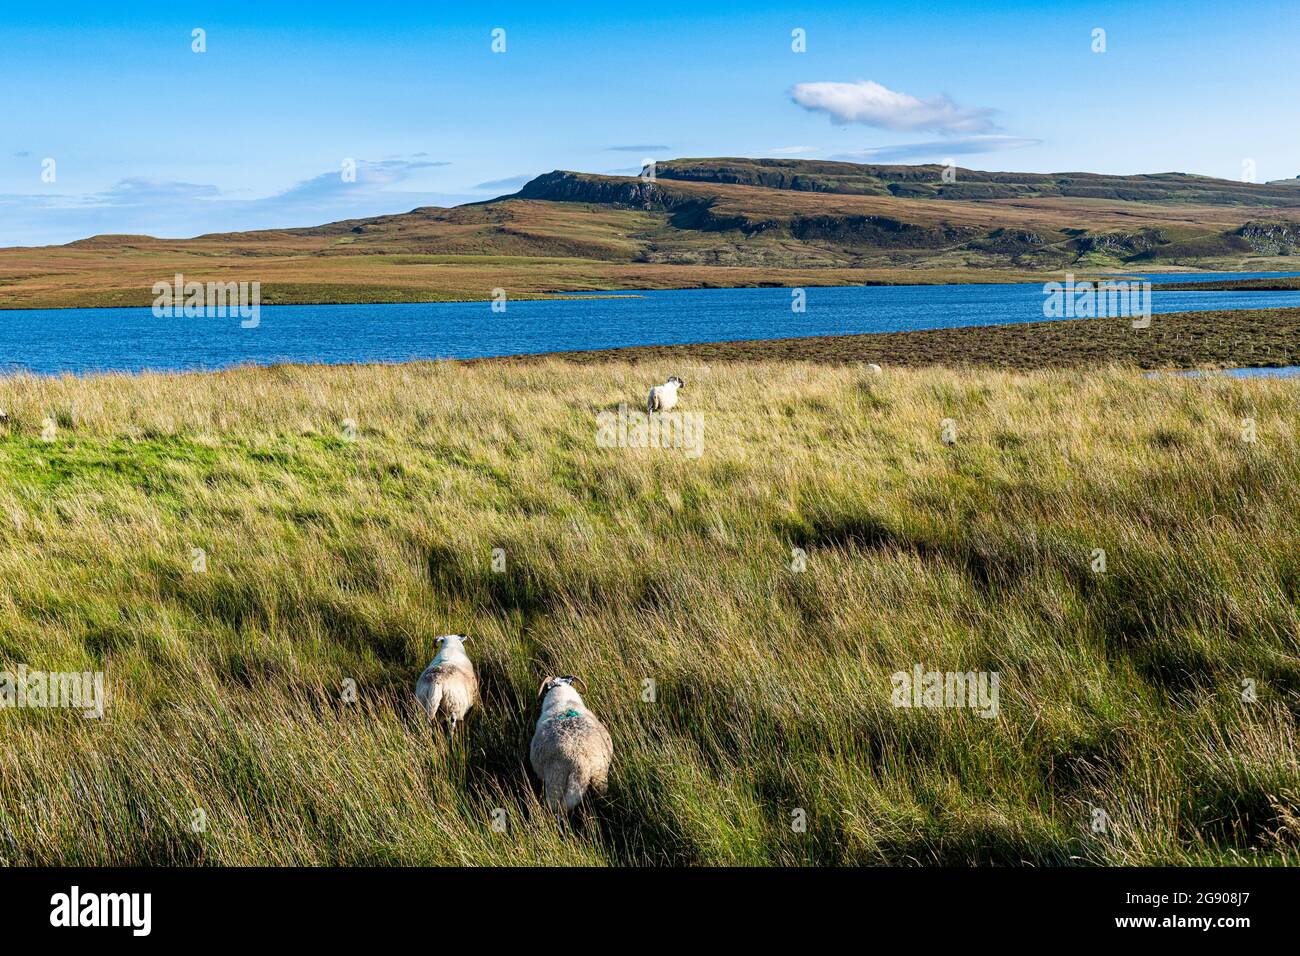 UK, Scotland, Sheep grazing on grassy shore of Loch Leathan Stock Photo